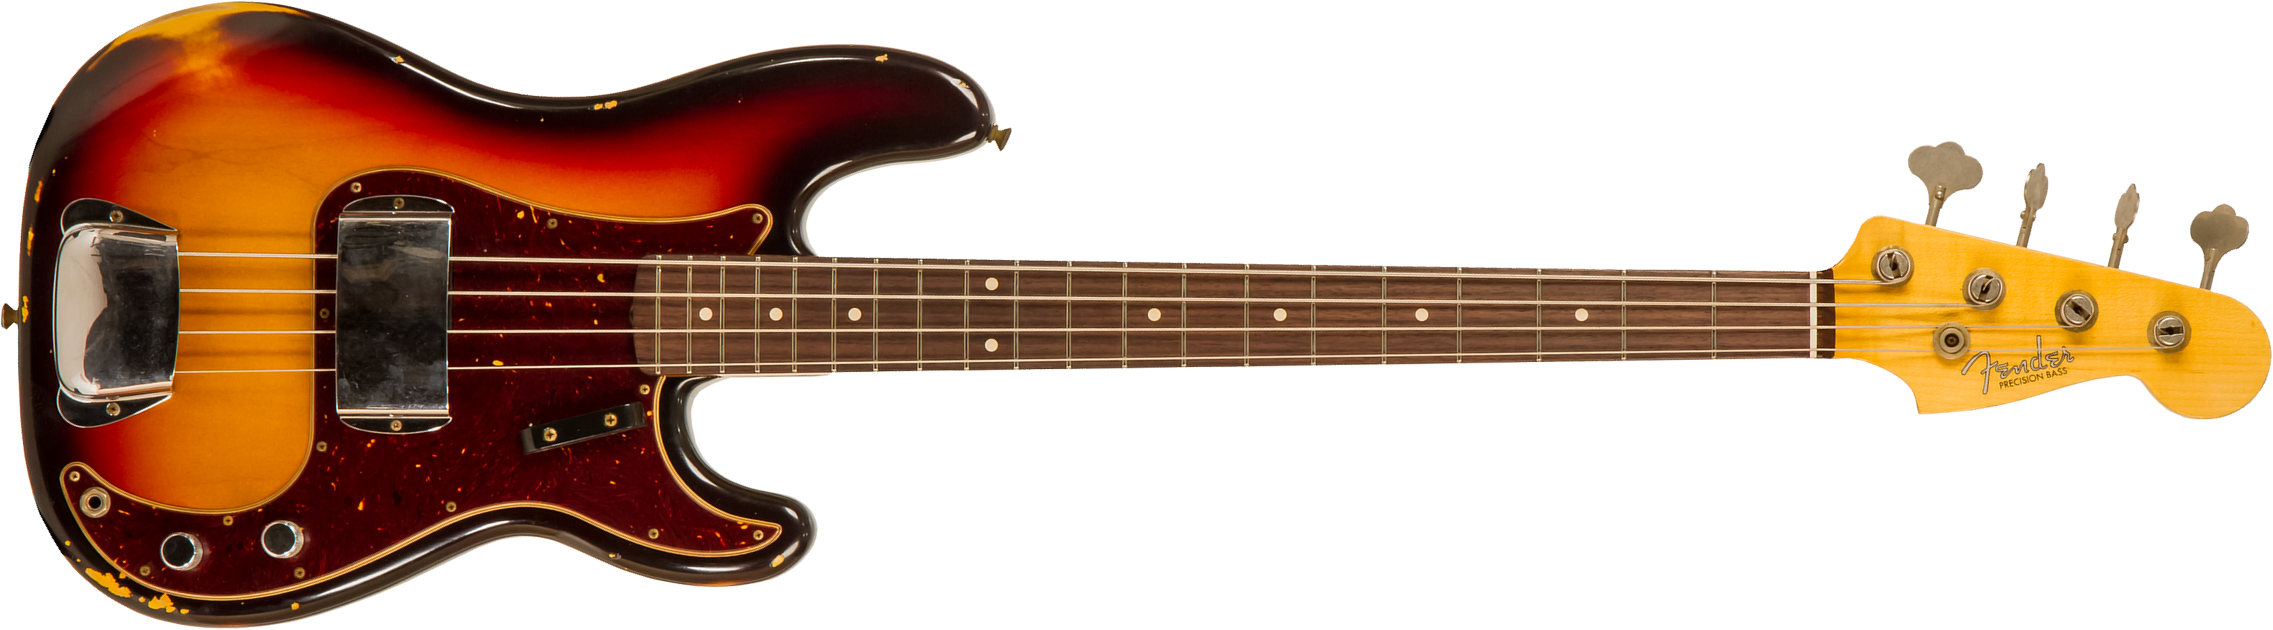 Fender Custom Shop Precision Bass 1961 Rw #cz556533 - Relic 3-color Sunburst - Solid body electric bass - Main picture